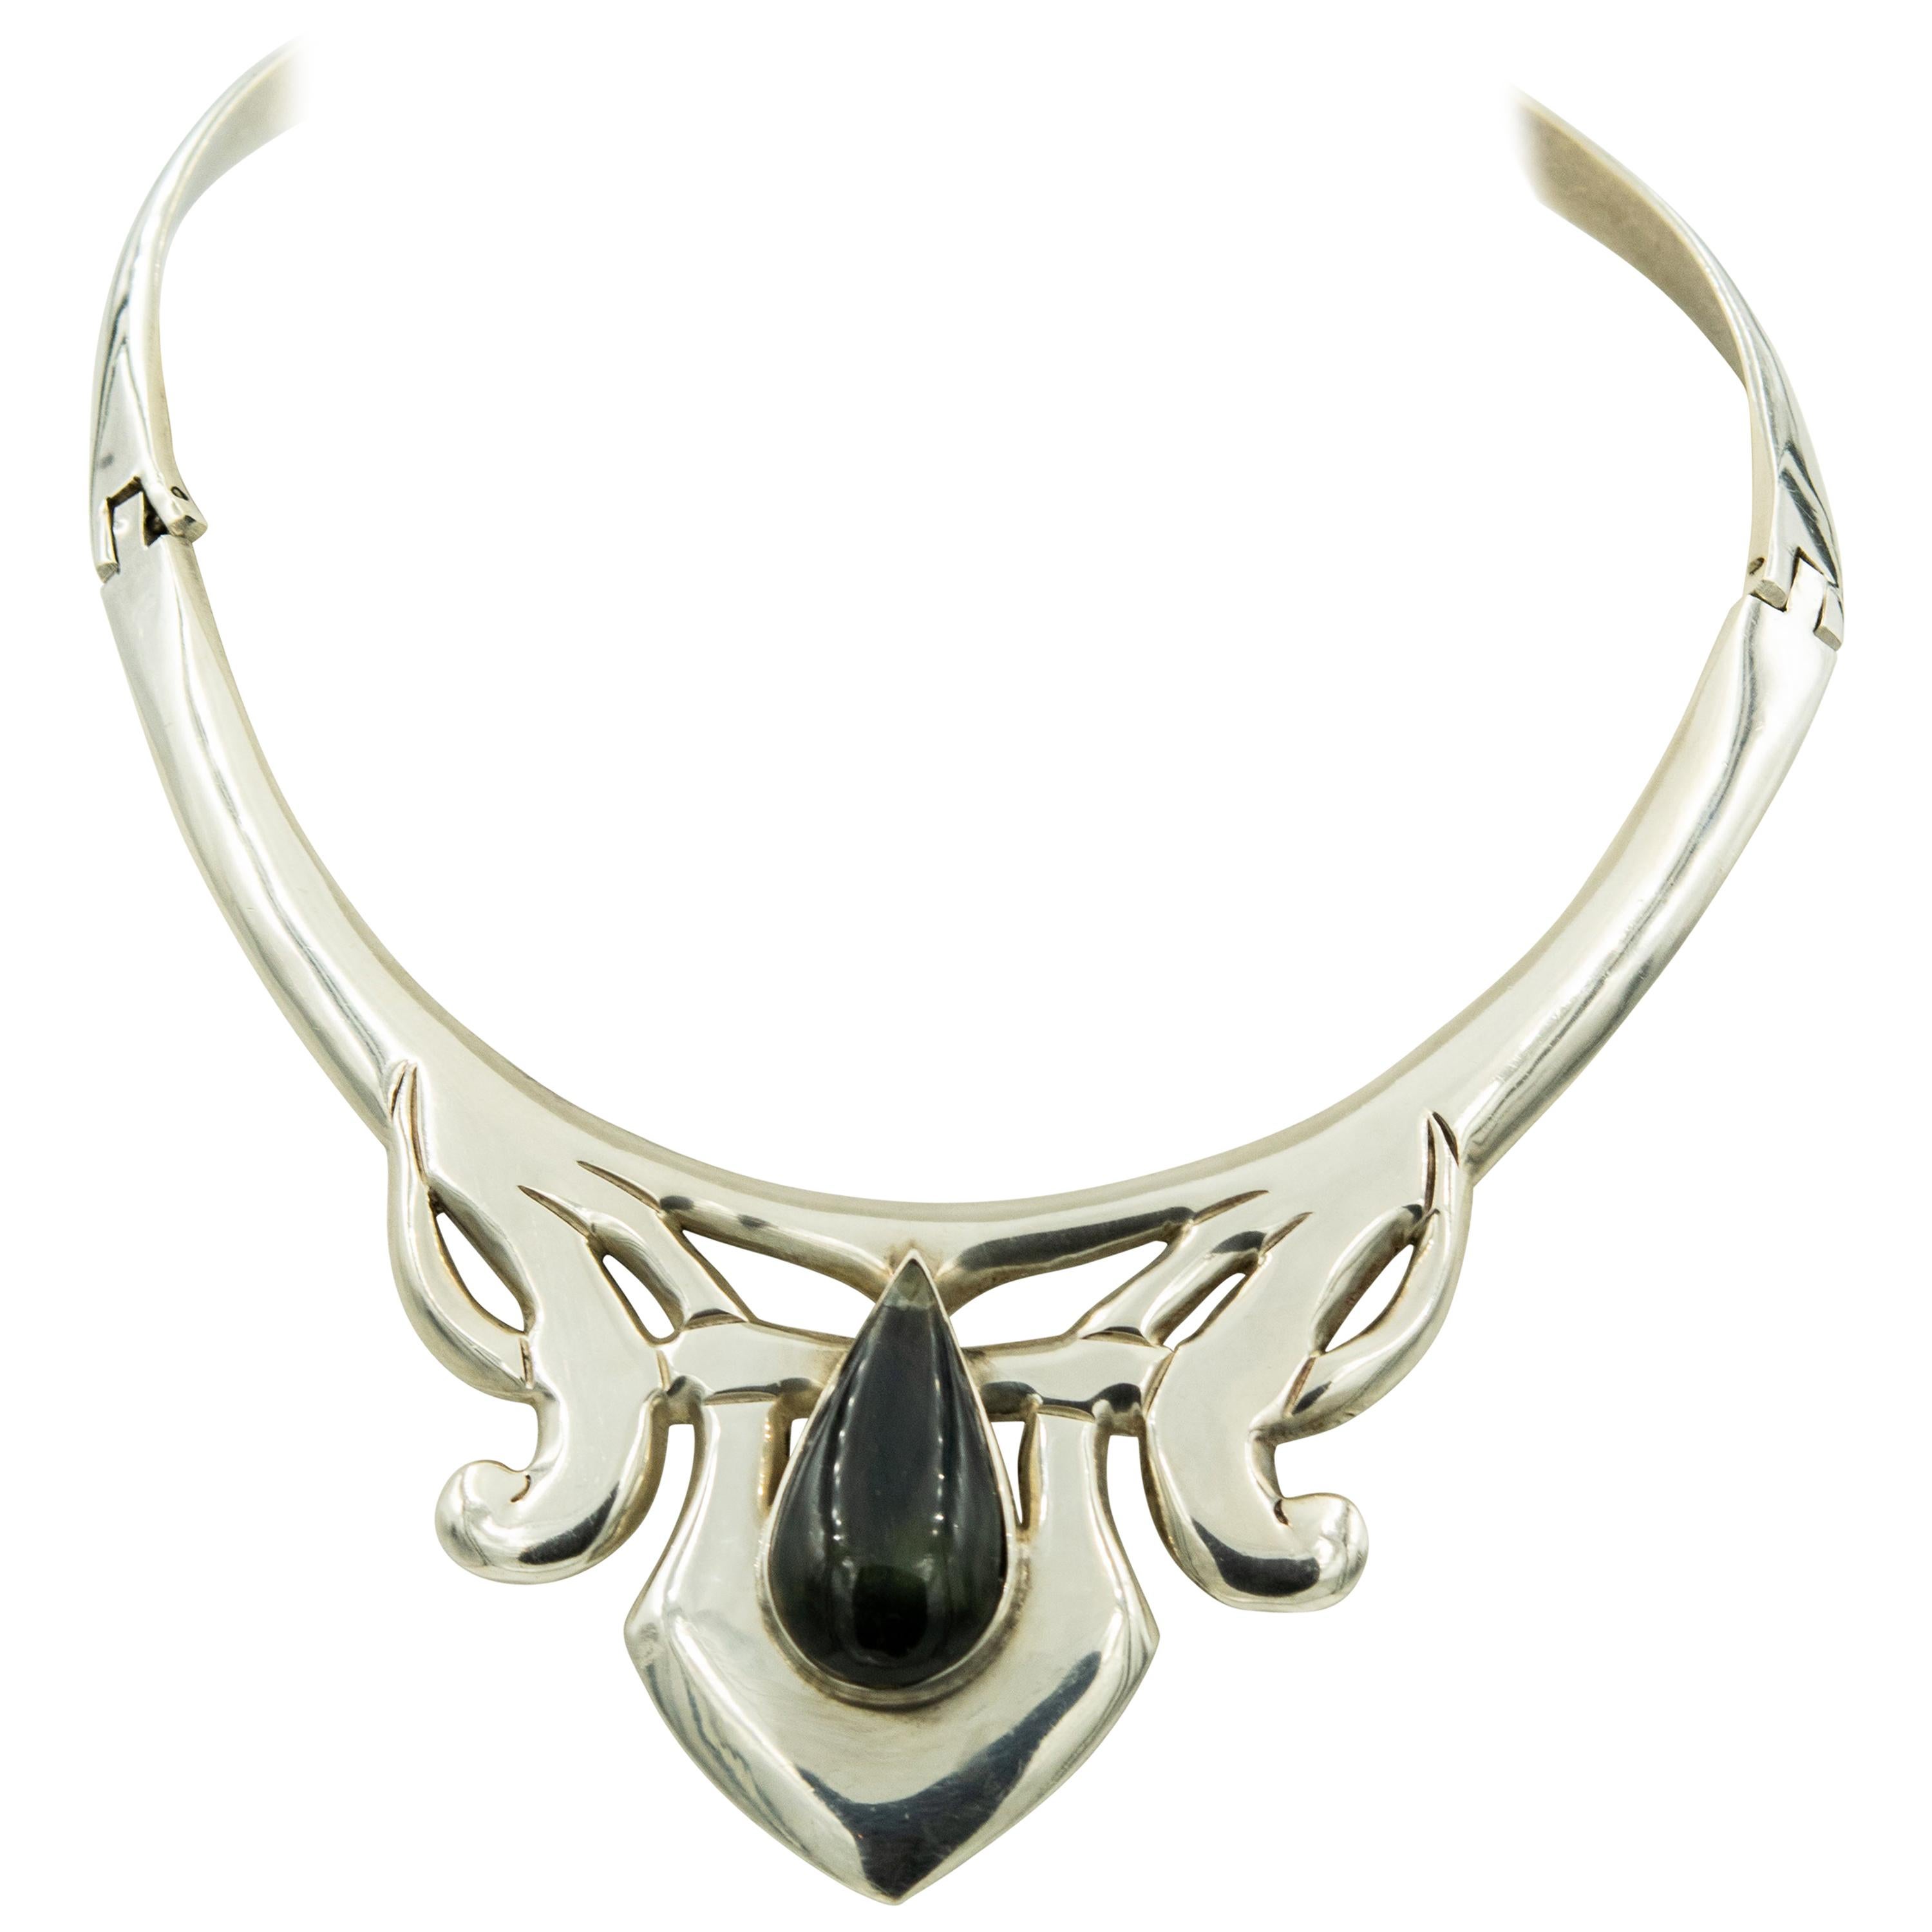 Modernist Taxco Mexican Sterling Silver Collar Necklace by Alicia De La Paz For Sale